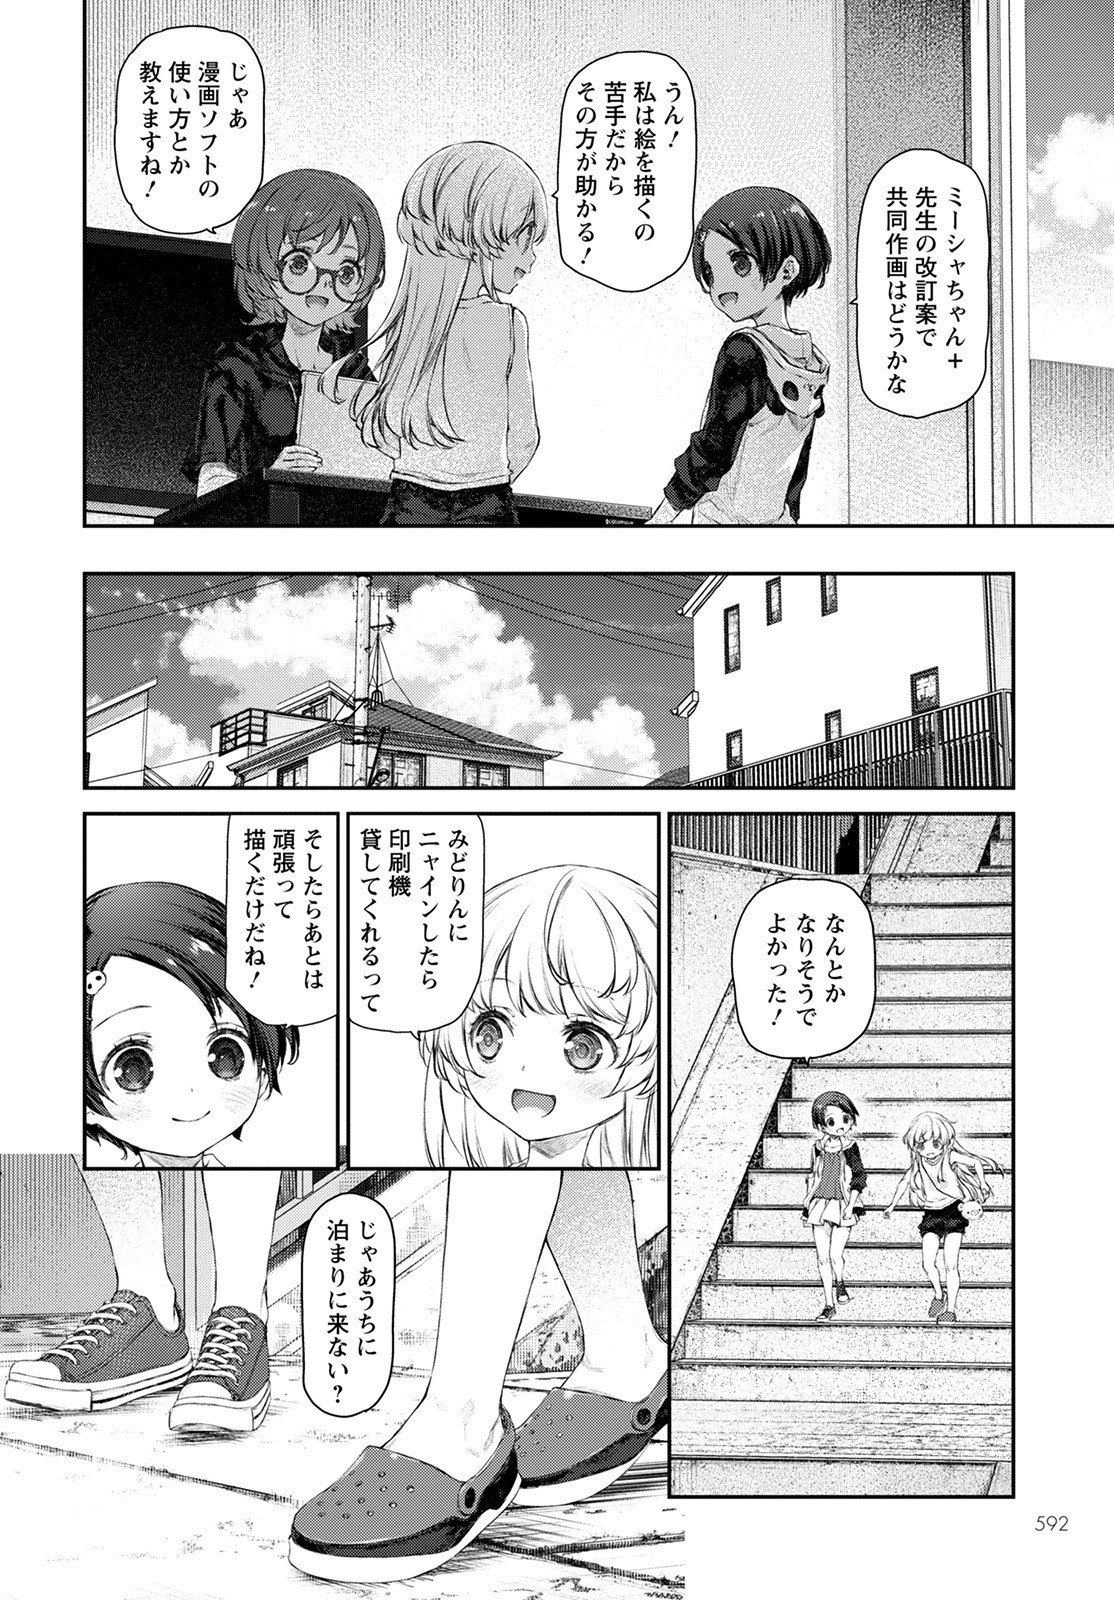 Uchi no Maid ga Uzasugiru! - Chapter 52 - Page 24